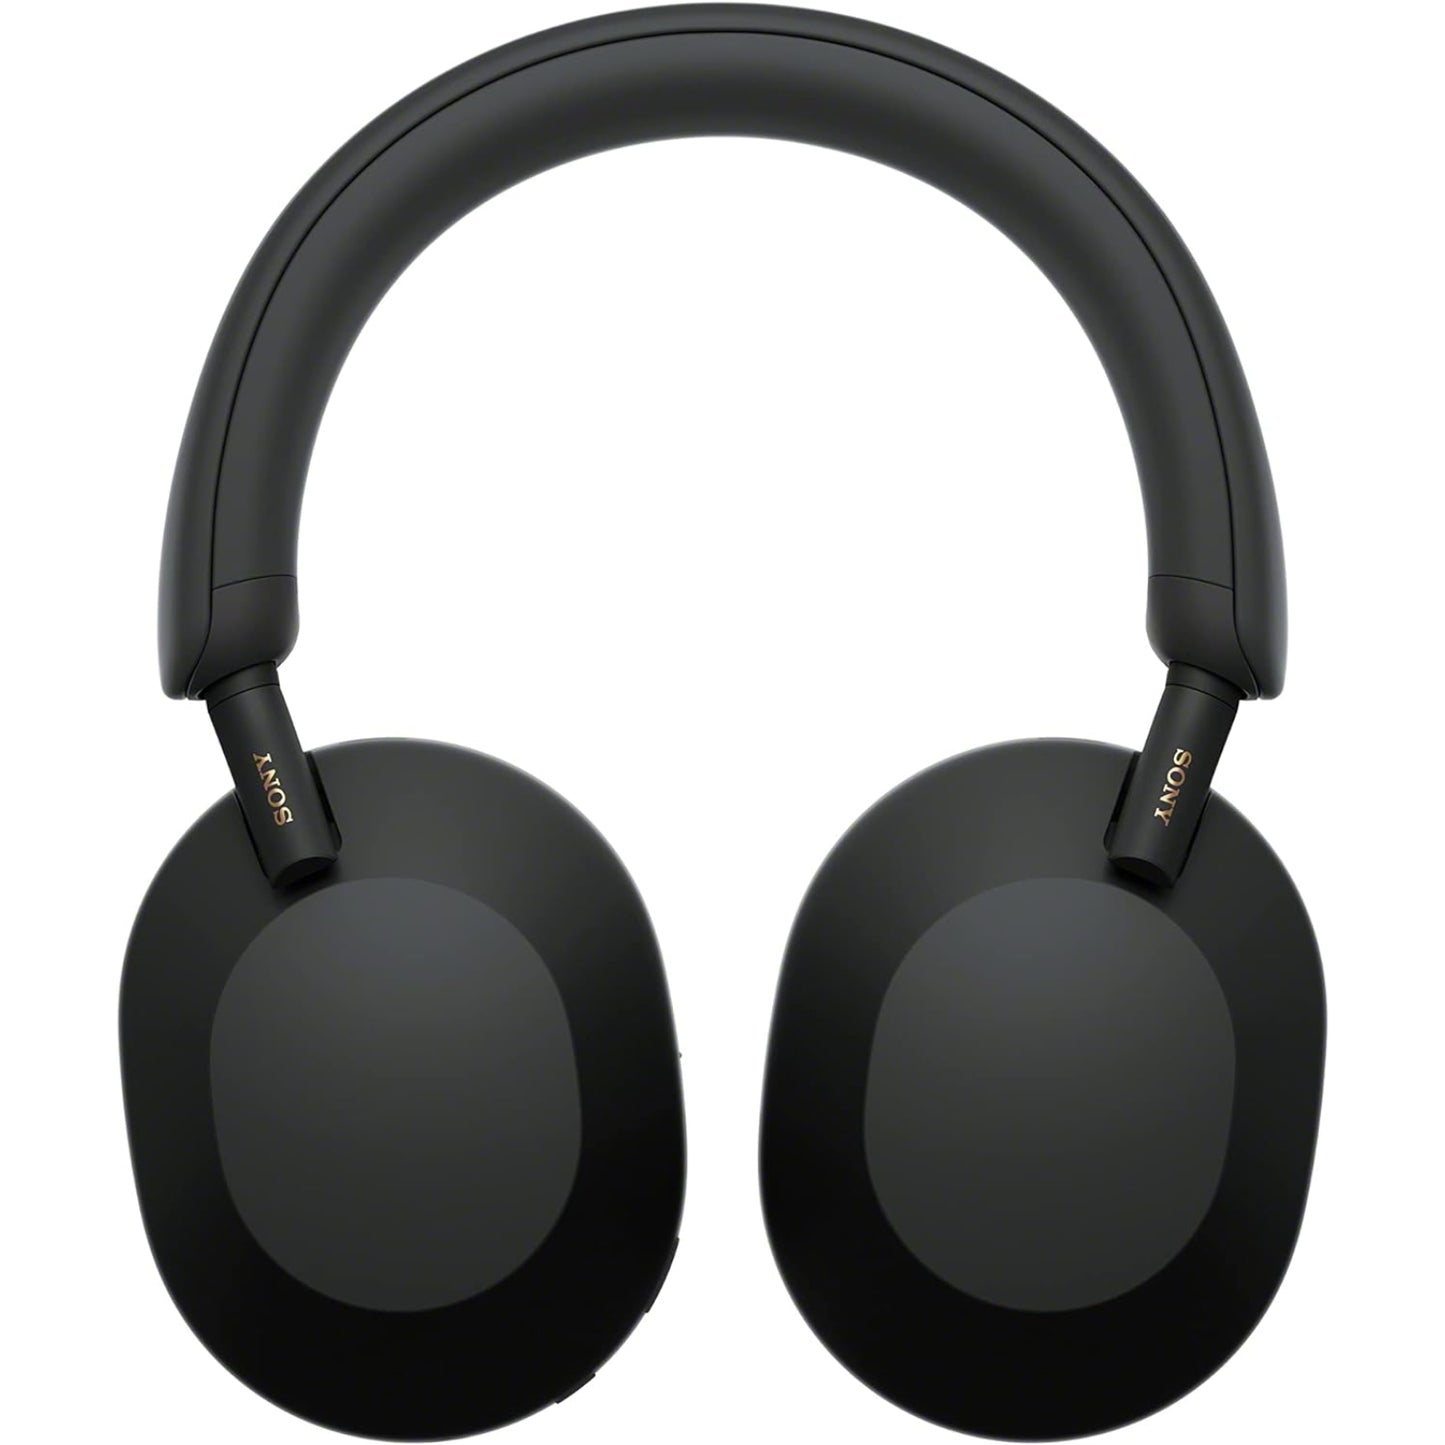 Sony WH-1000X M5 Wireless NC Headphone Black